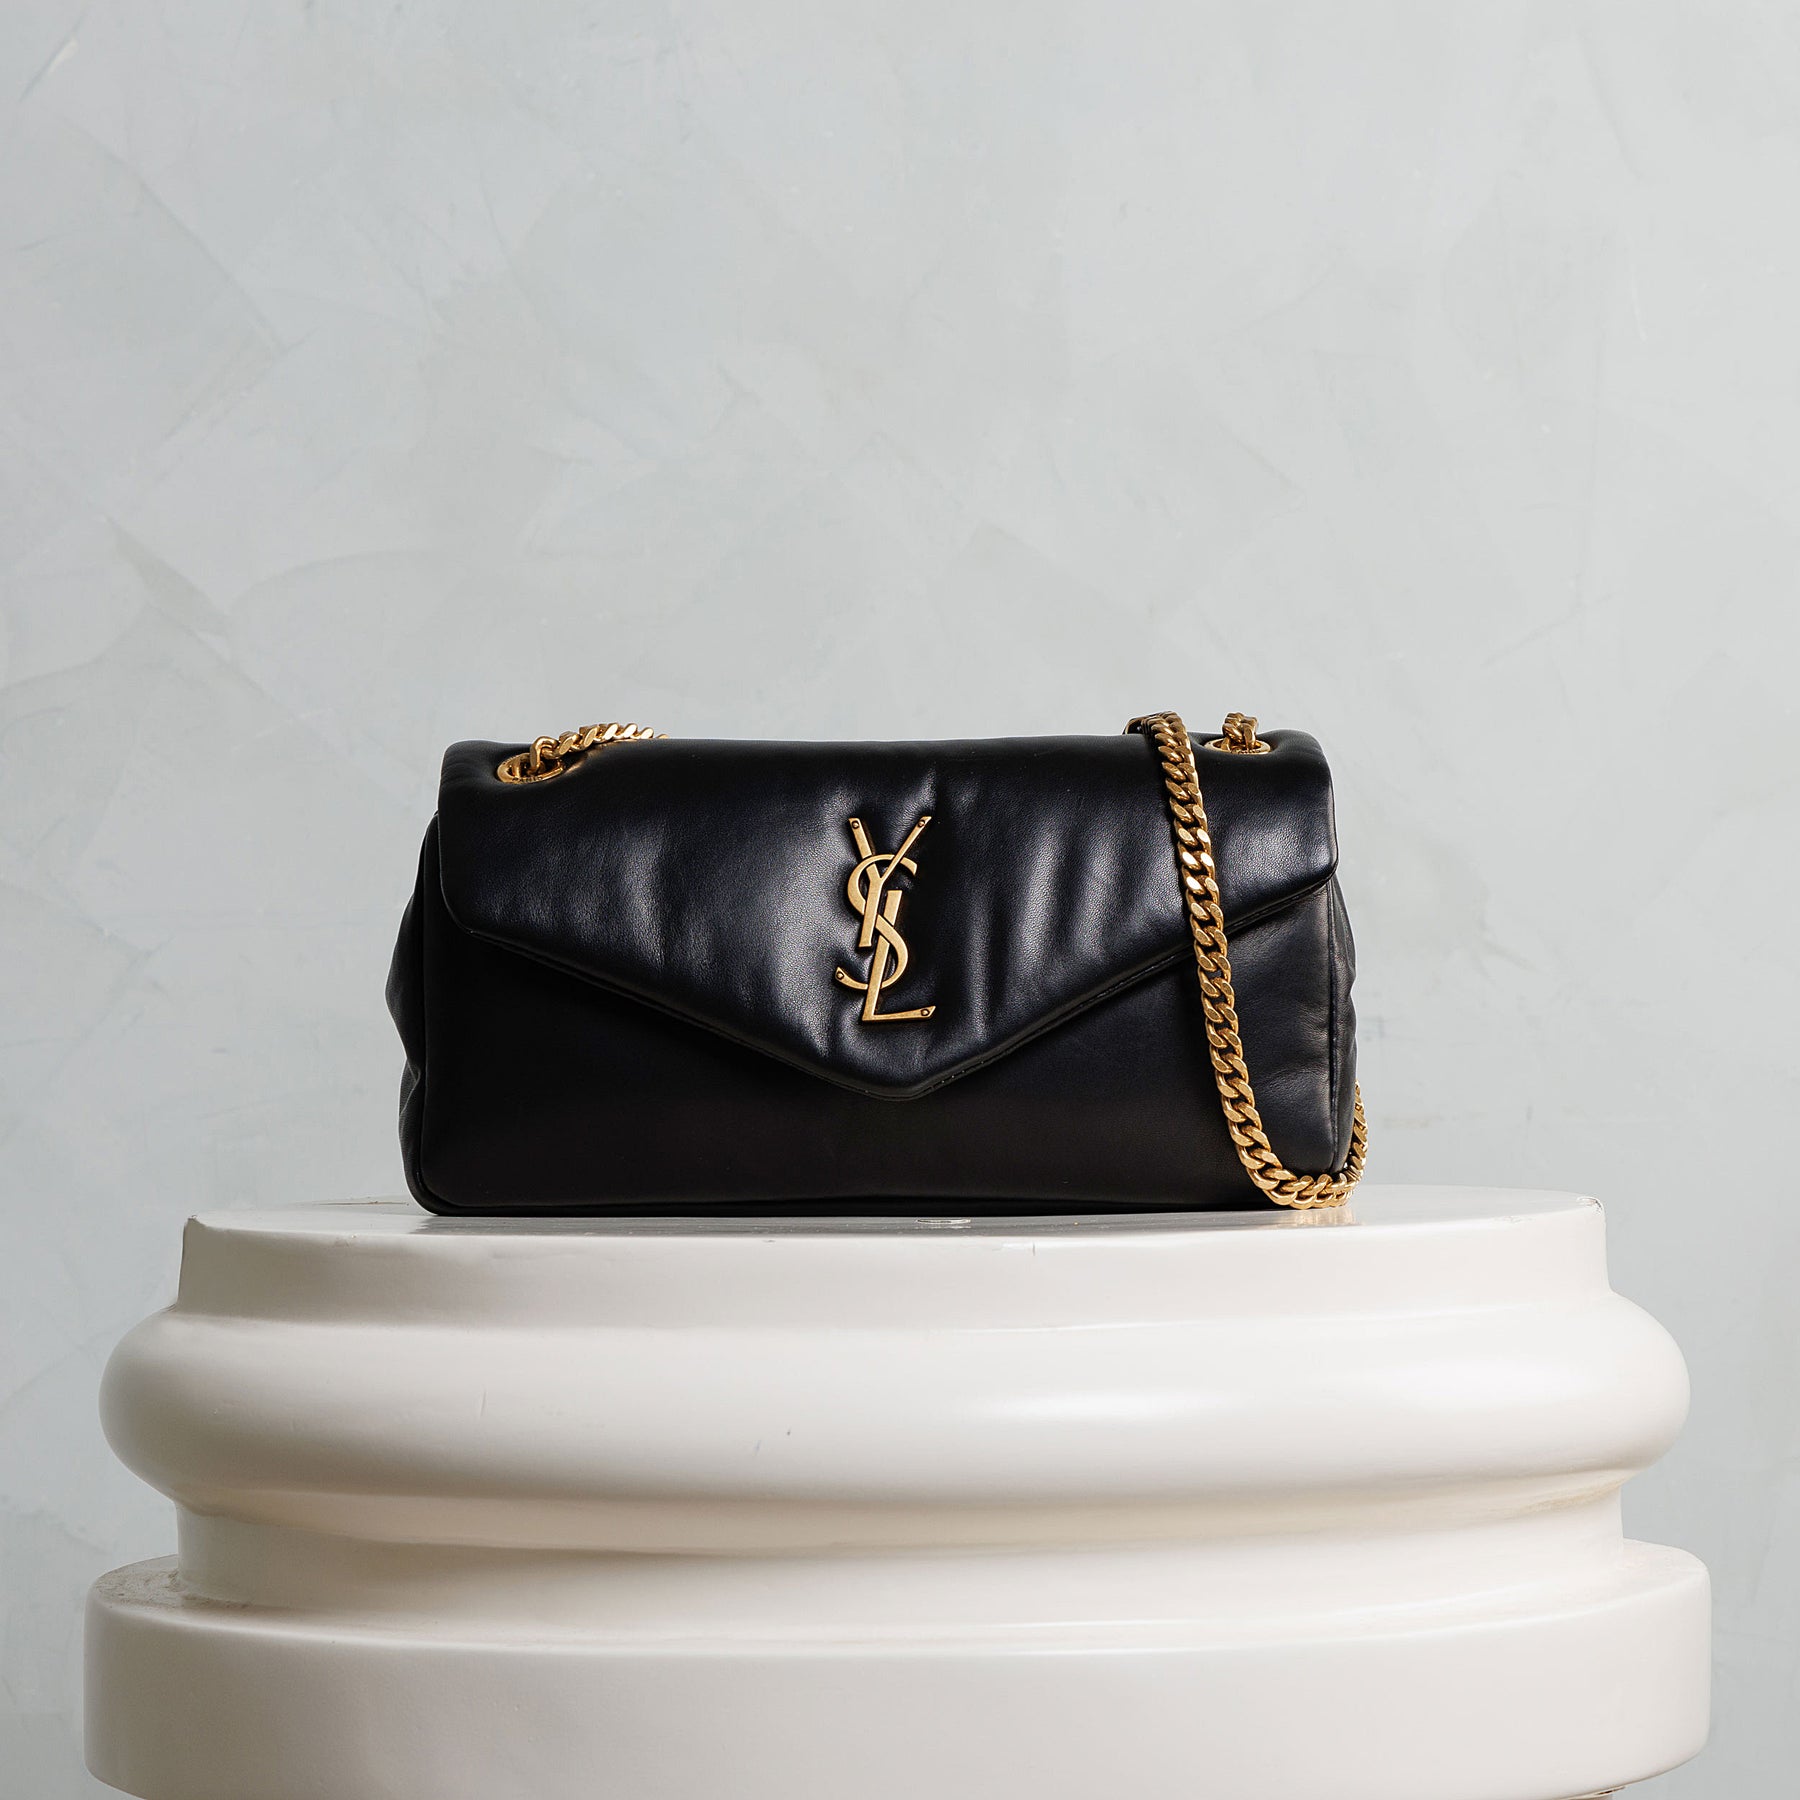 YSL LouLou - Best mini designer bags to buy